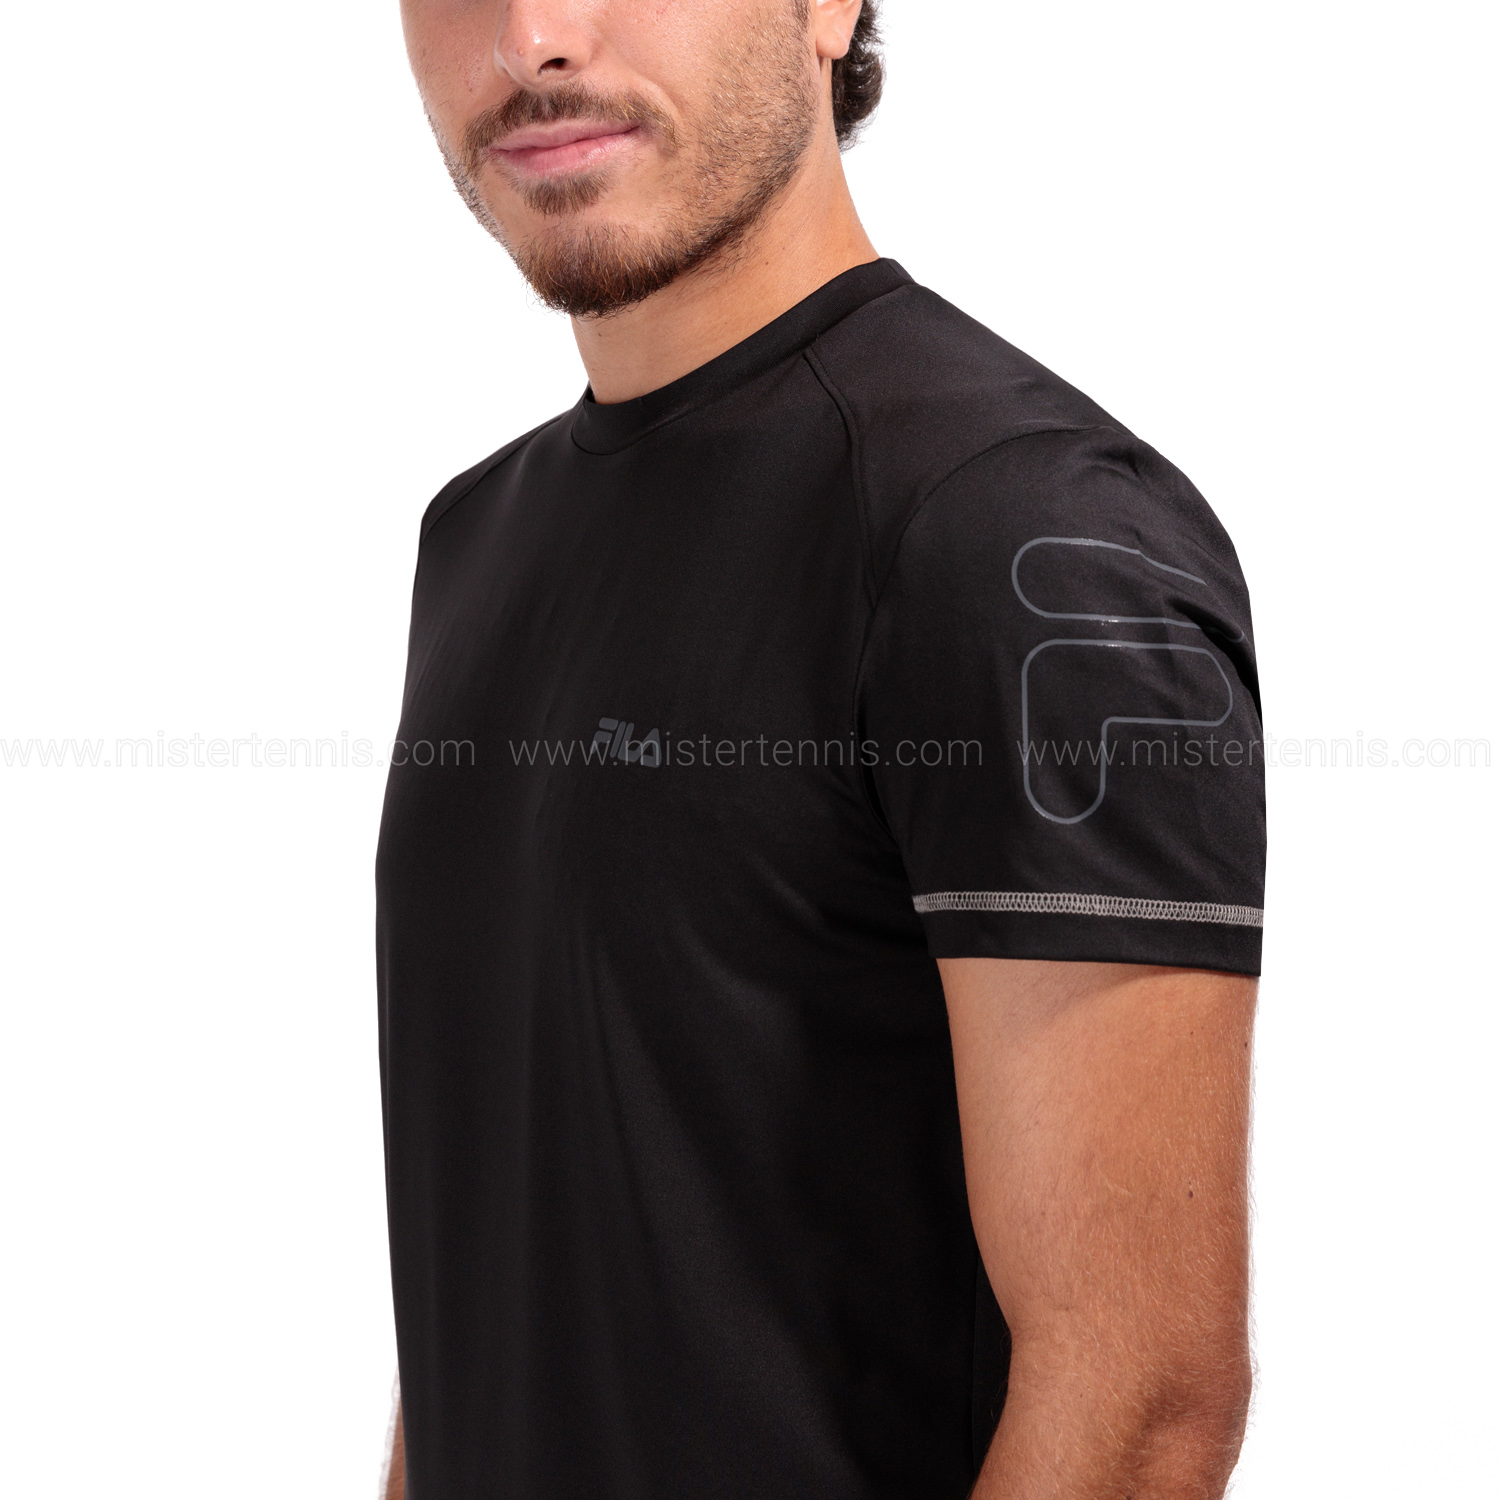 Fila Moritz Camiseta - Black